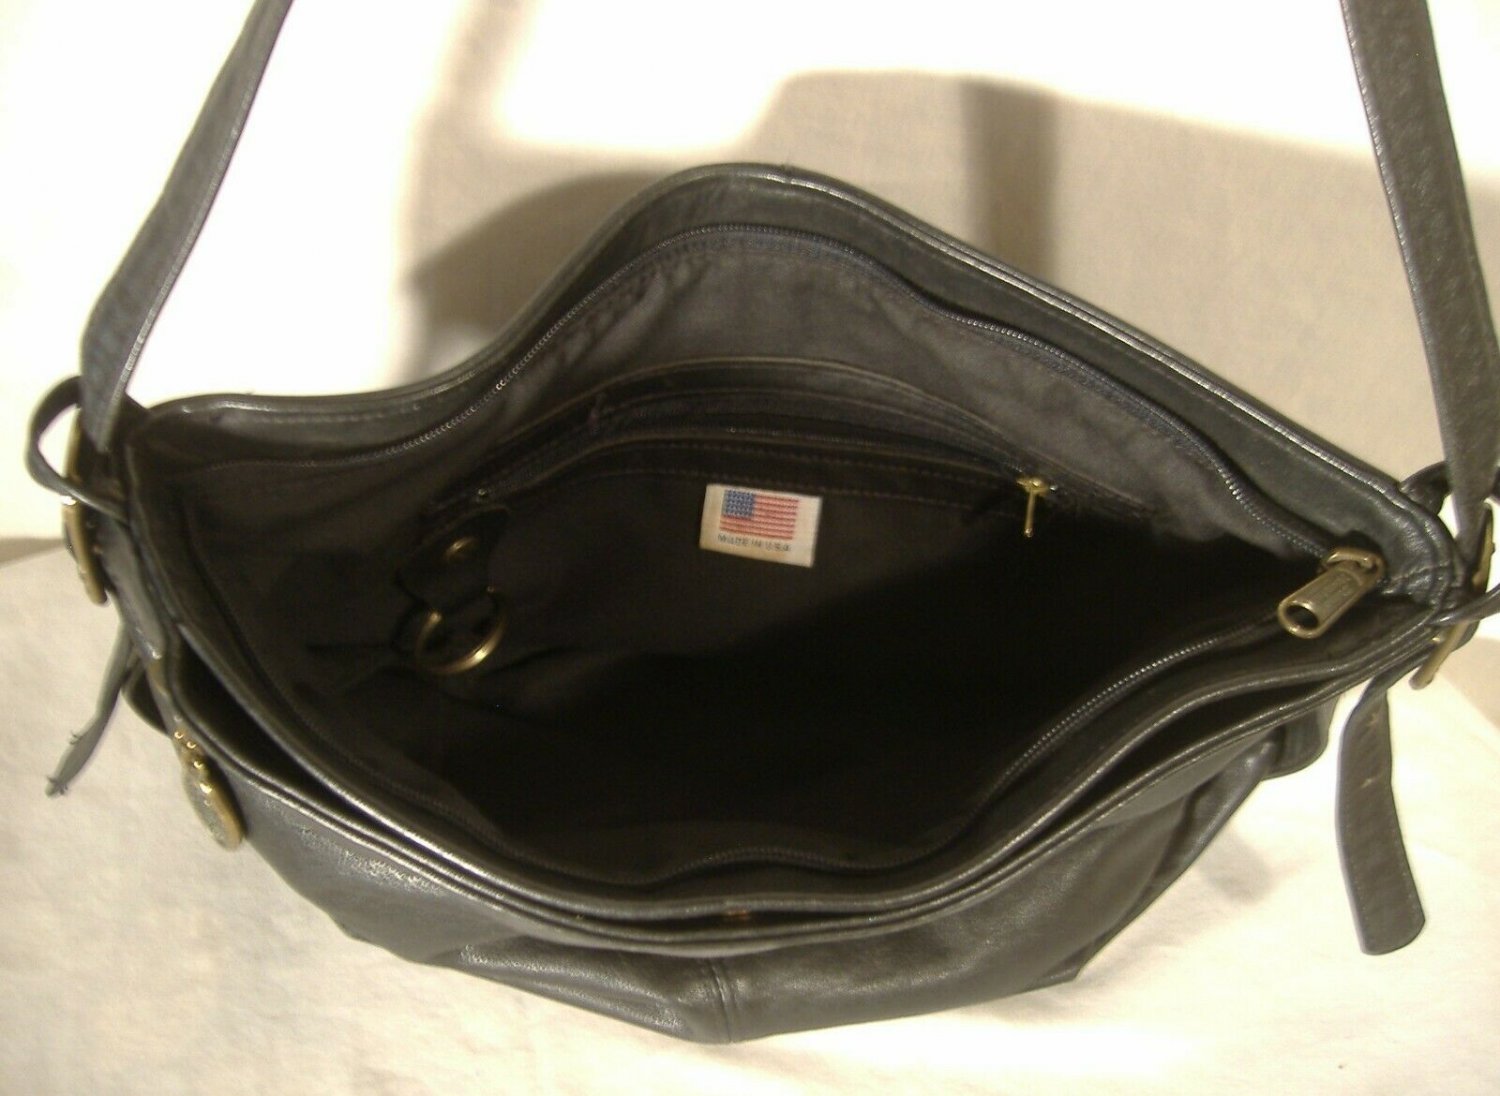 Stone Mountain Black Leather Purse Vintage Shoulder Bag